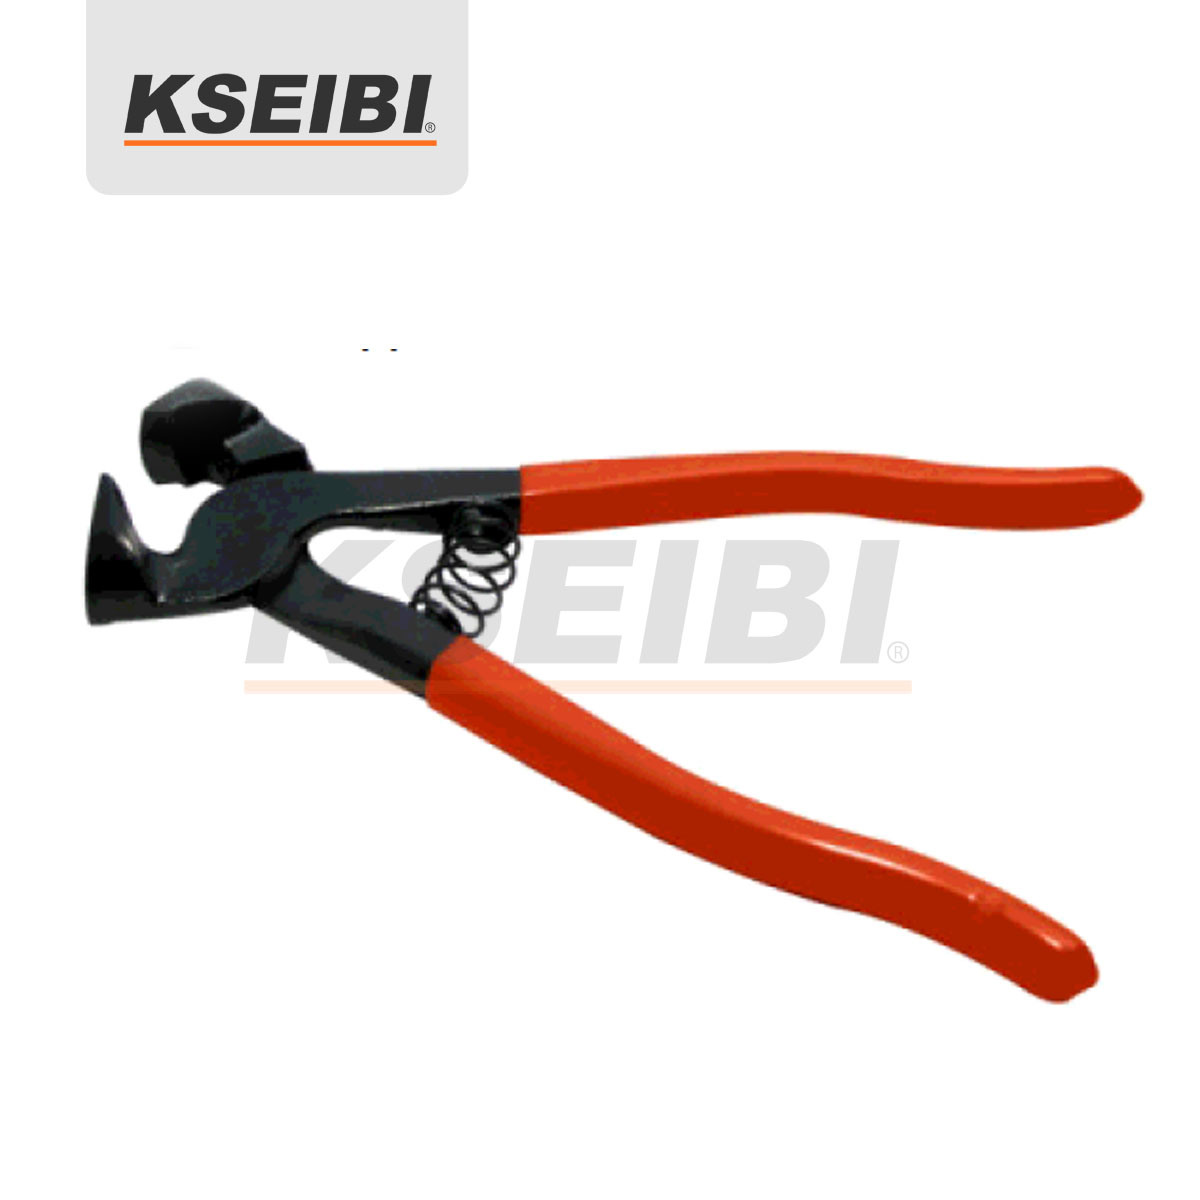 Kseibi -Hand Tools Tile Ceramic Nipper with PVC Handle